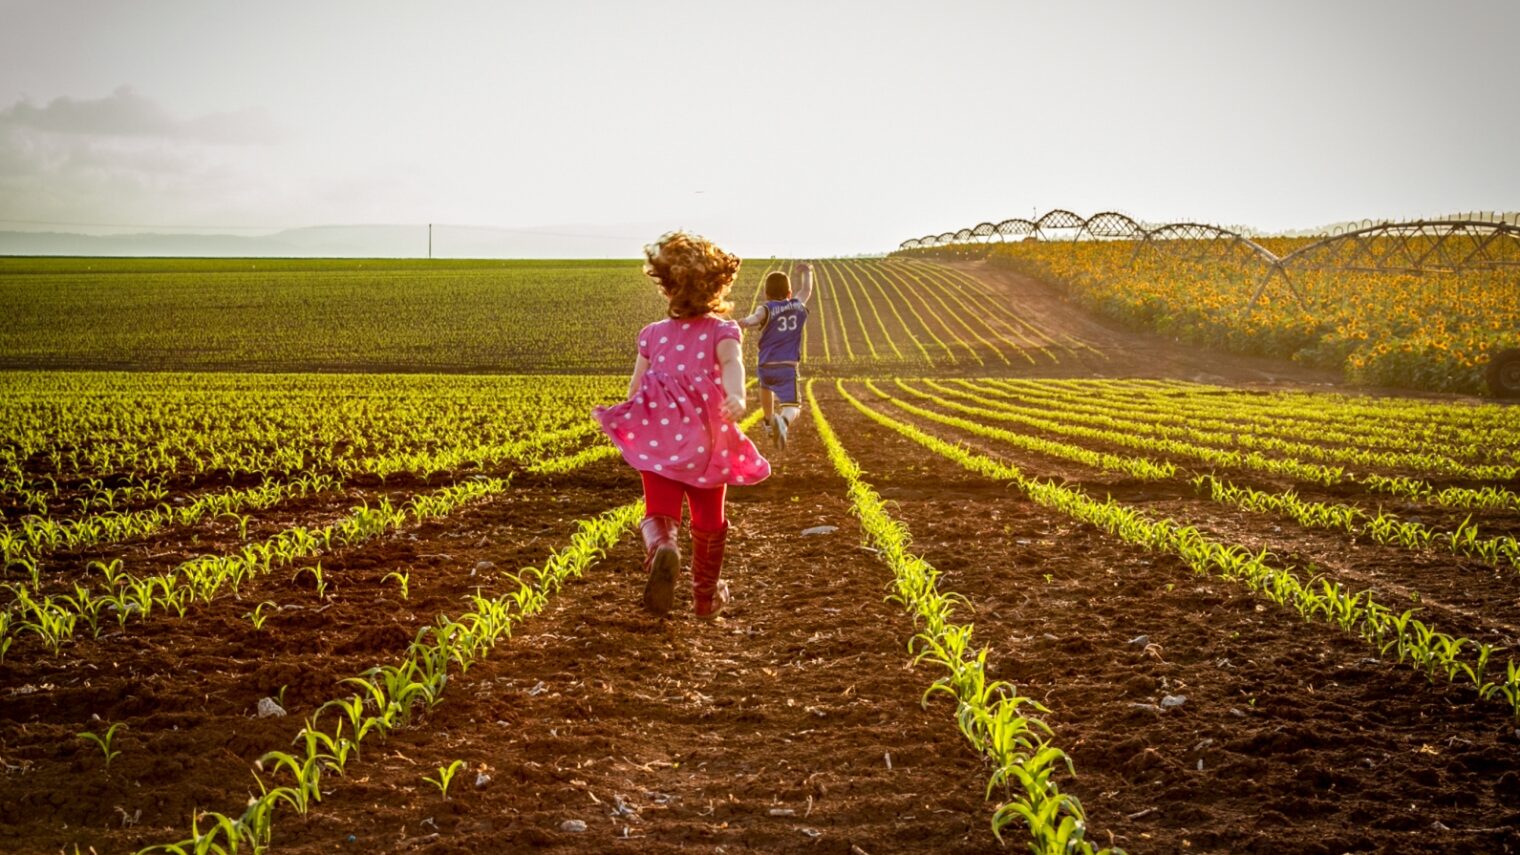 Children running through farm fields in Israel’s Jezreel Valley. Photo by Anat Hermony/FLASH90